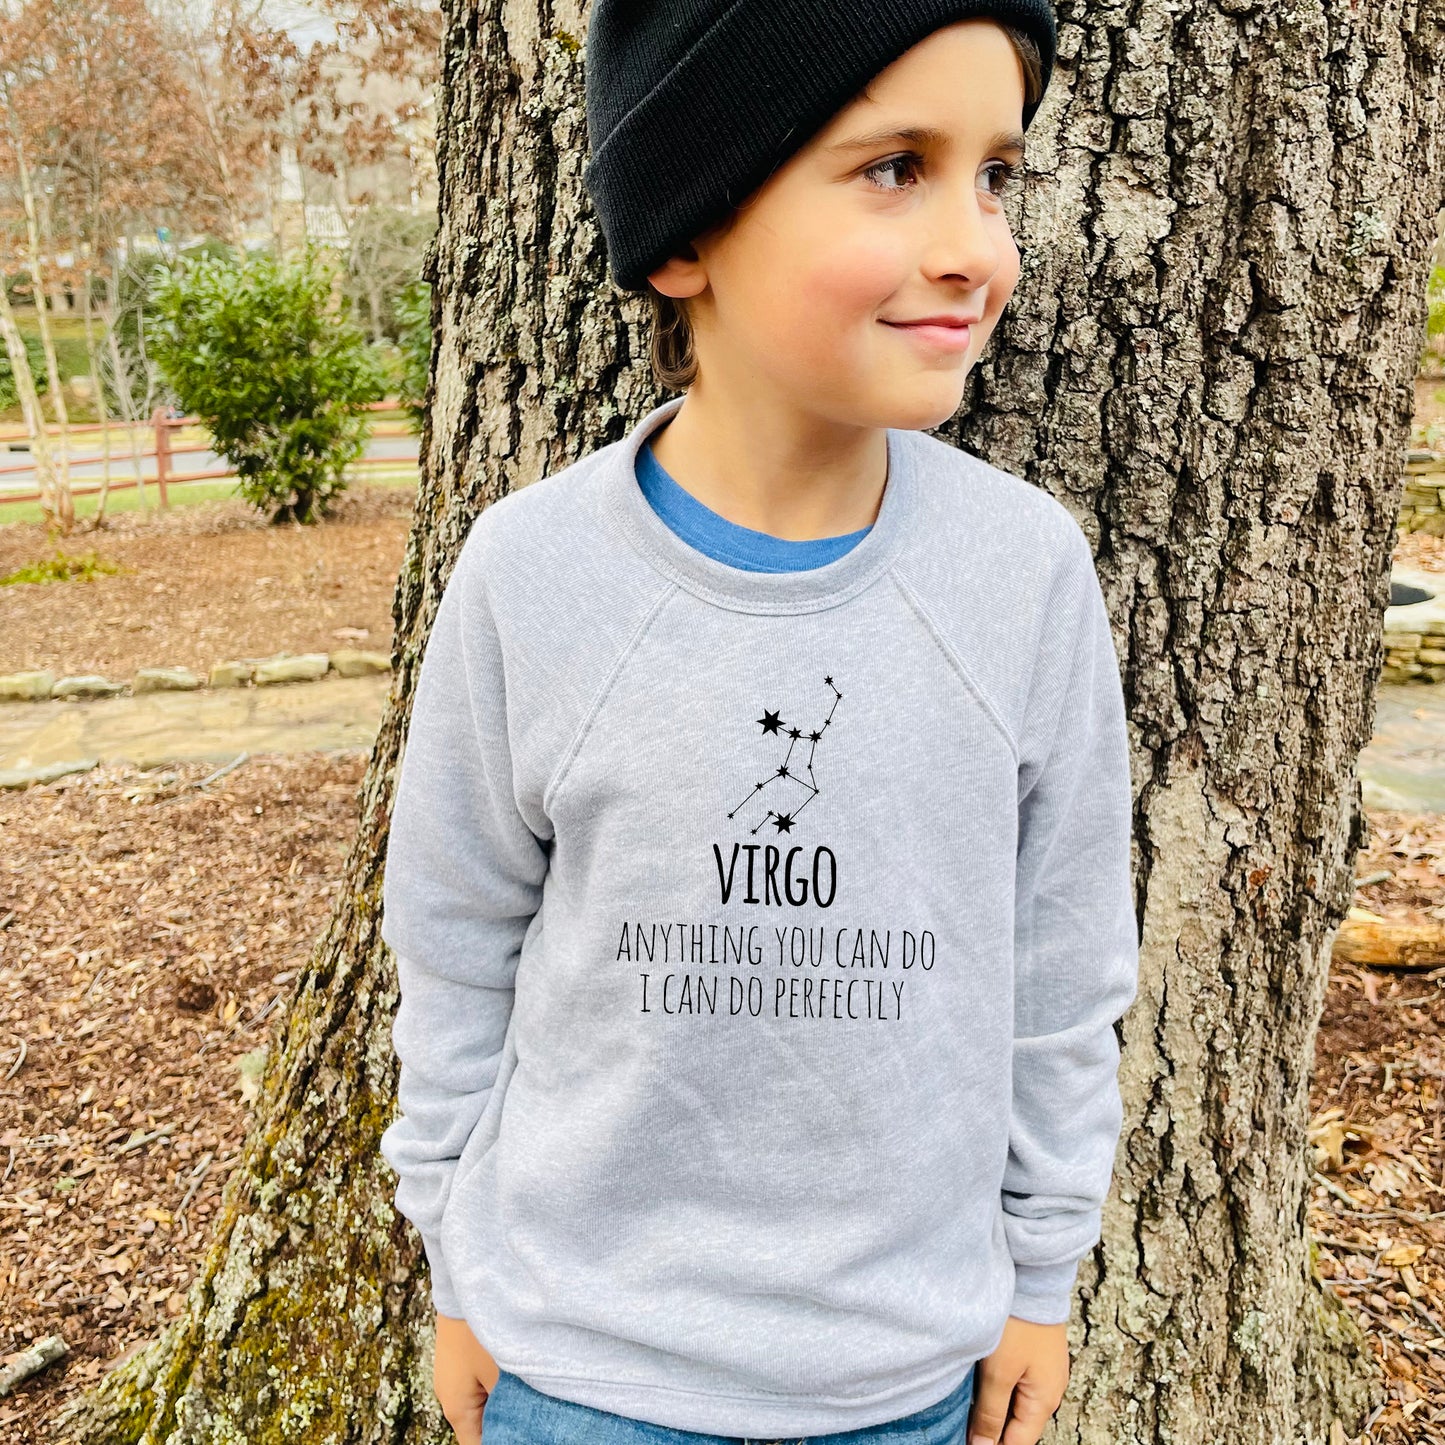 Virgo - Kid's Sweatshirt - Heather Gray or Mauve